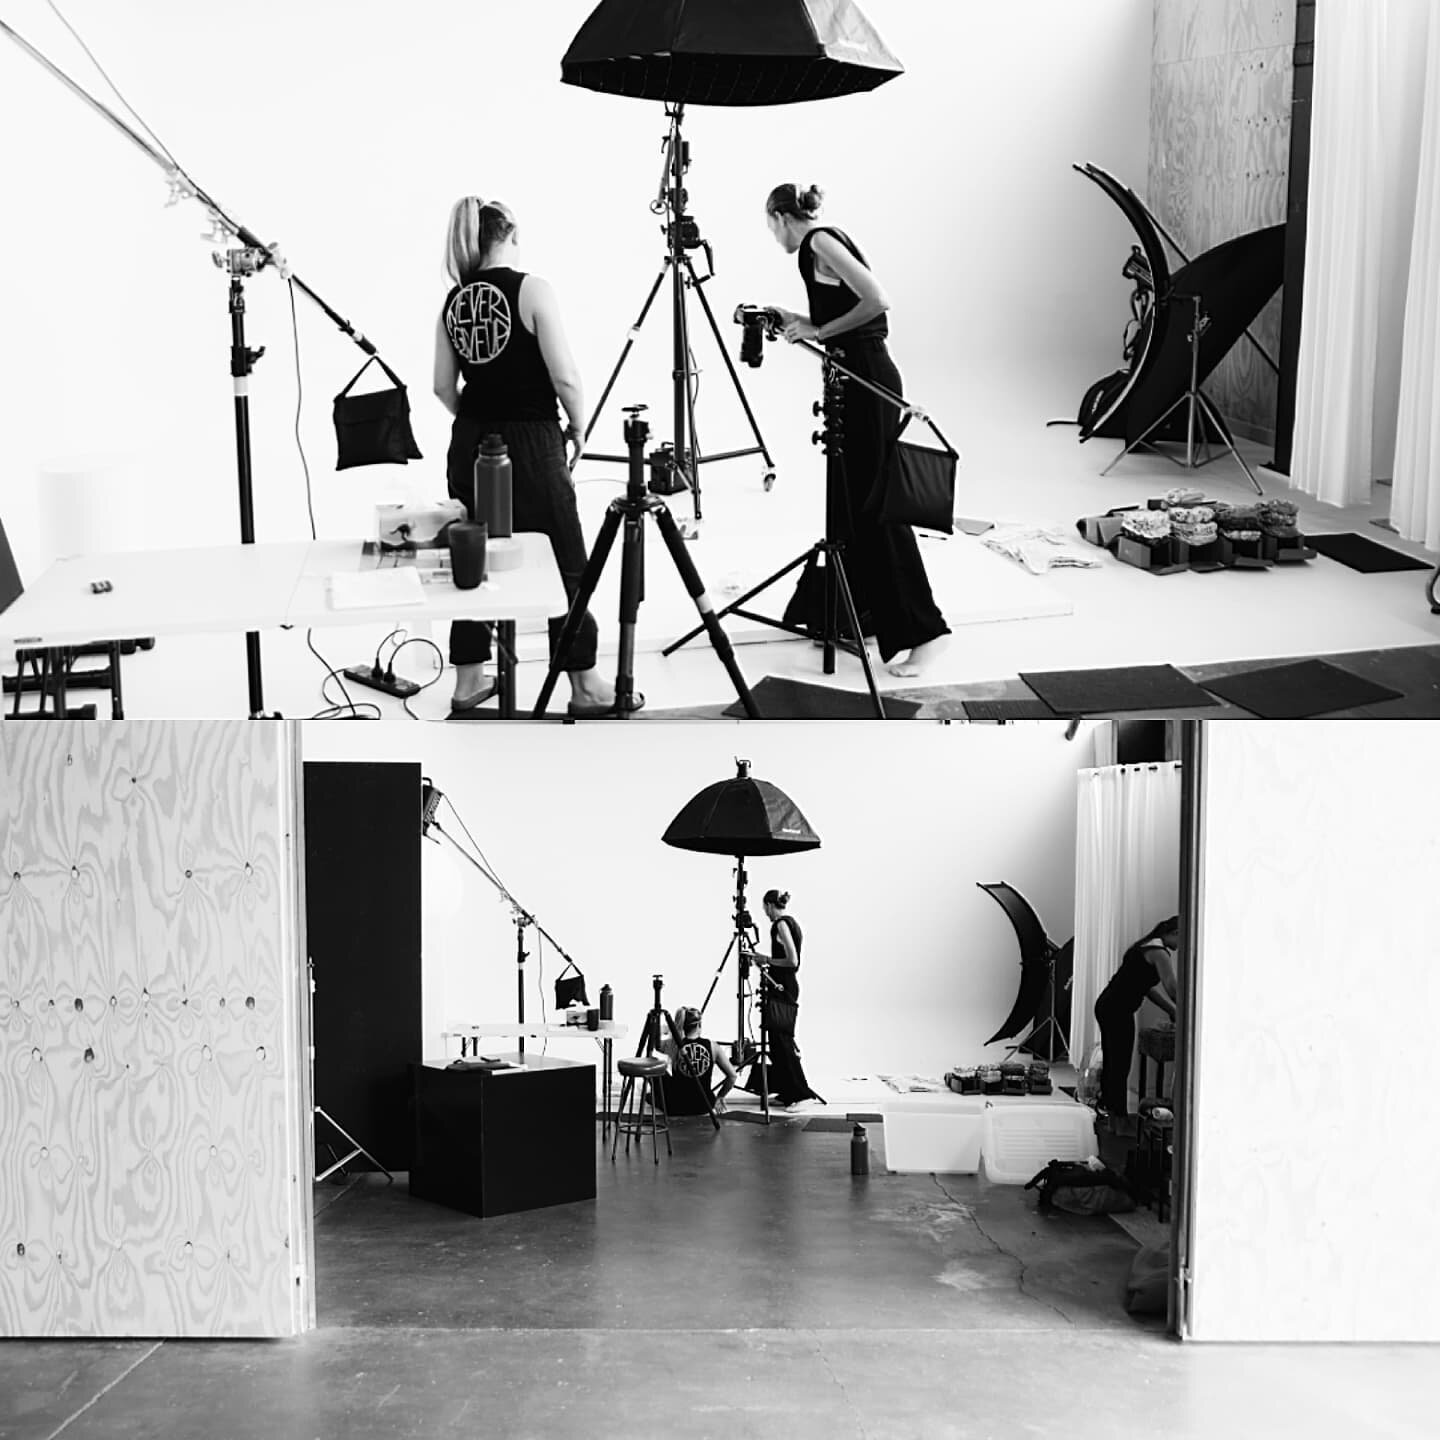 The @bareandboho team with @emmajadephotographer  in the studio working and creating 👌
#h86studios #brisbanephotostudio #studiohire 
#naturallightstudio